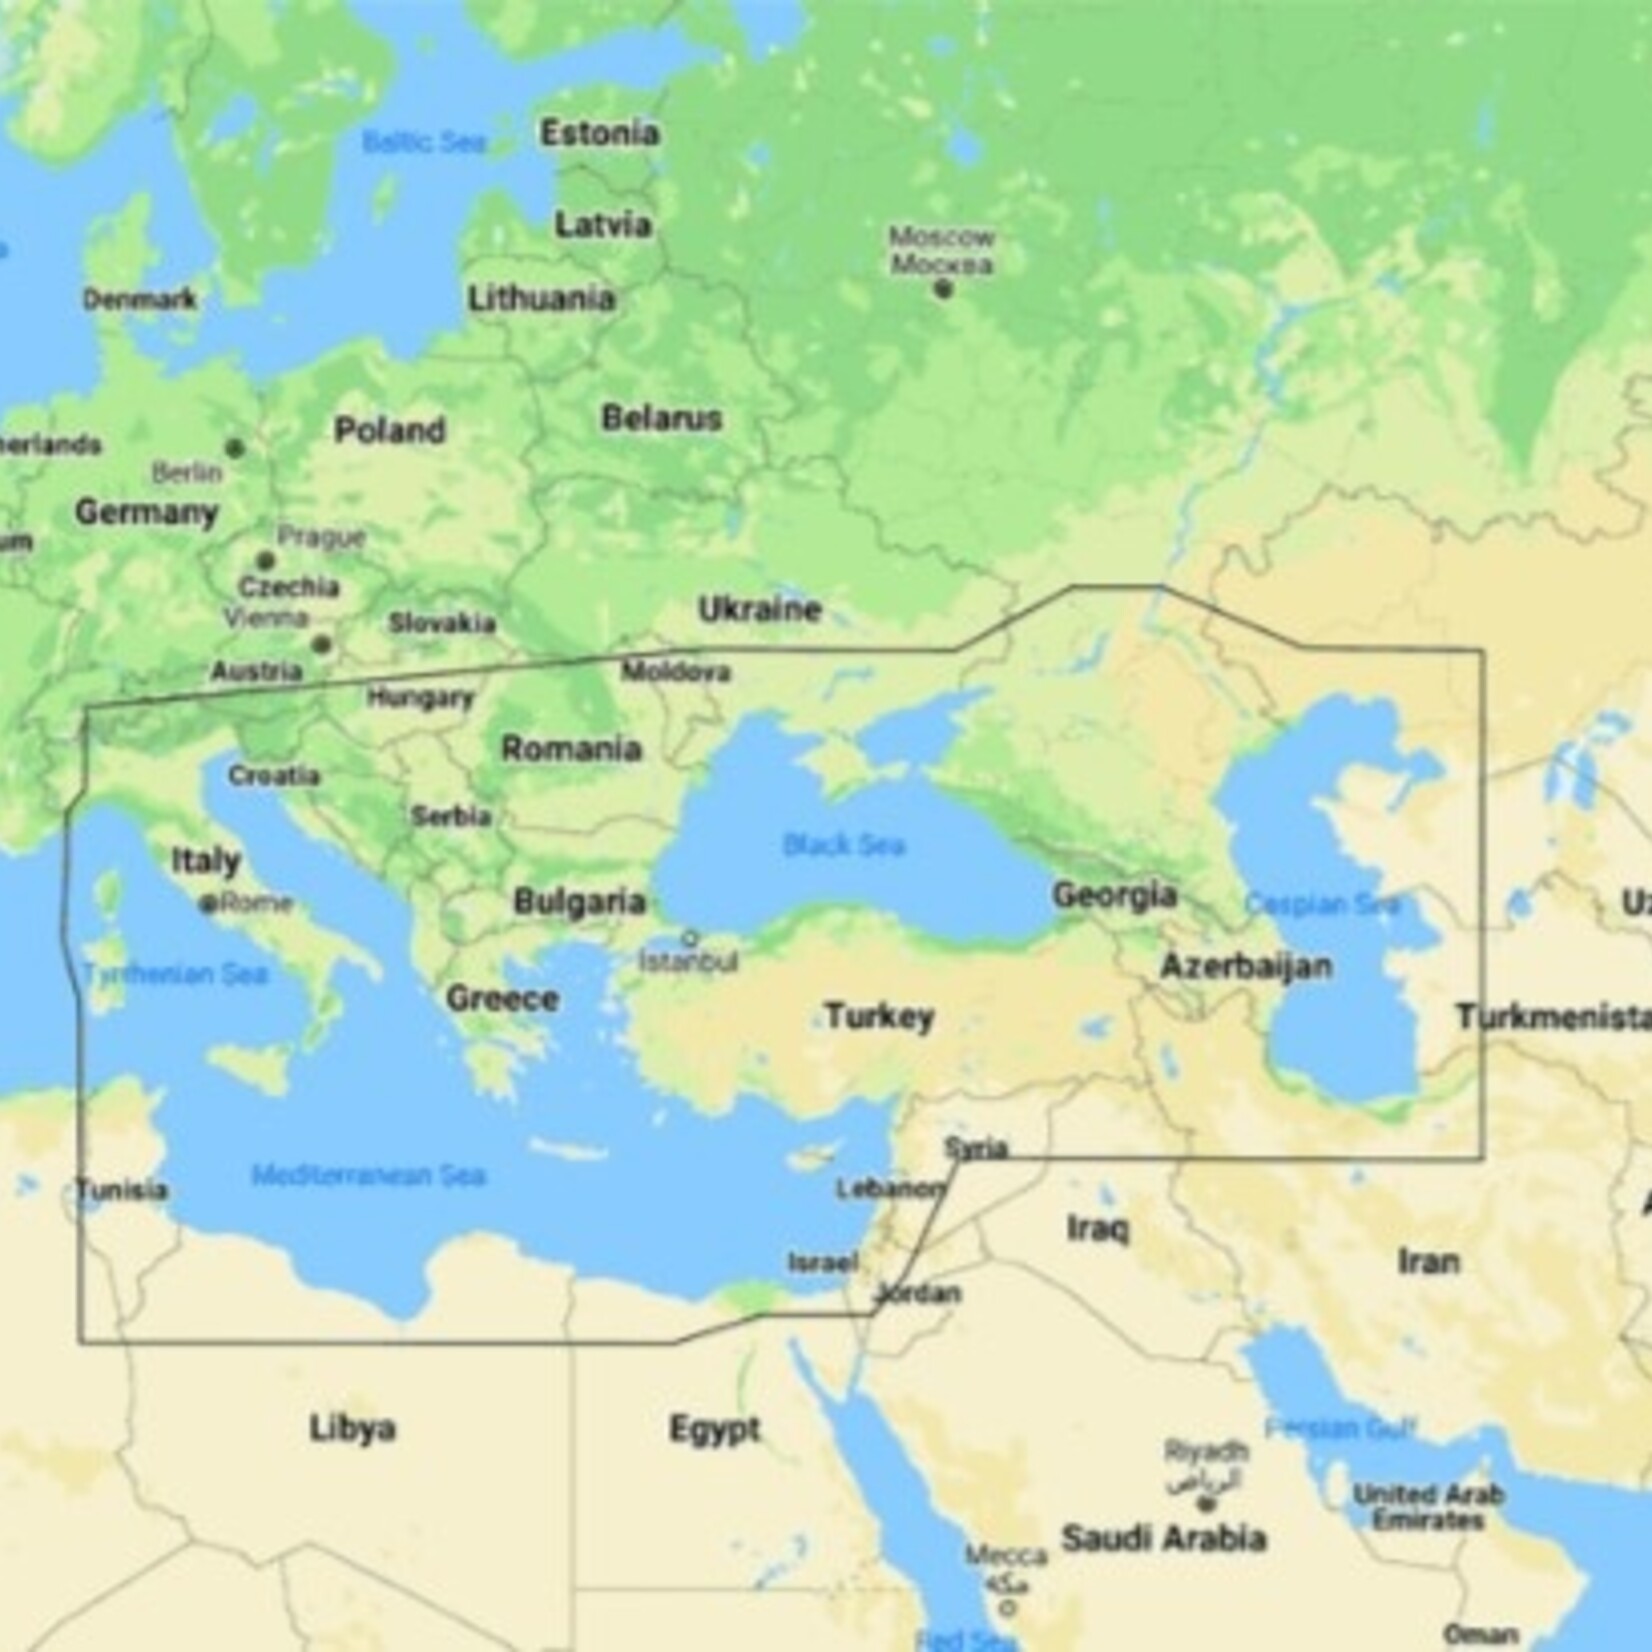 C-MAP REVEAL - East Mediterranean & Caspian Seas